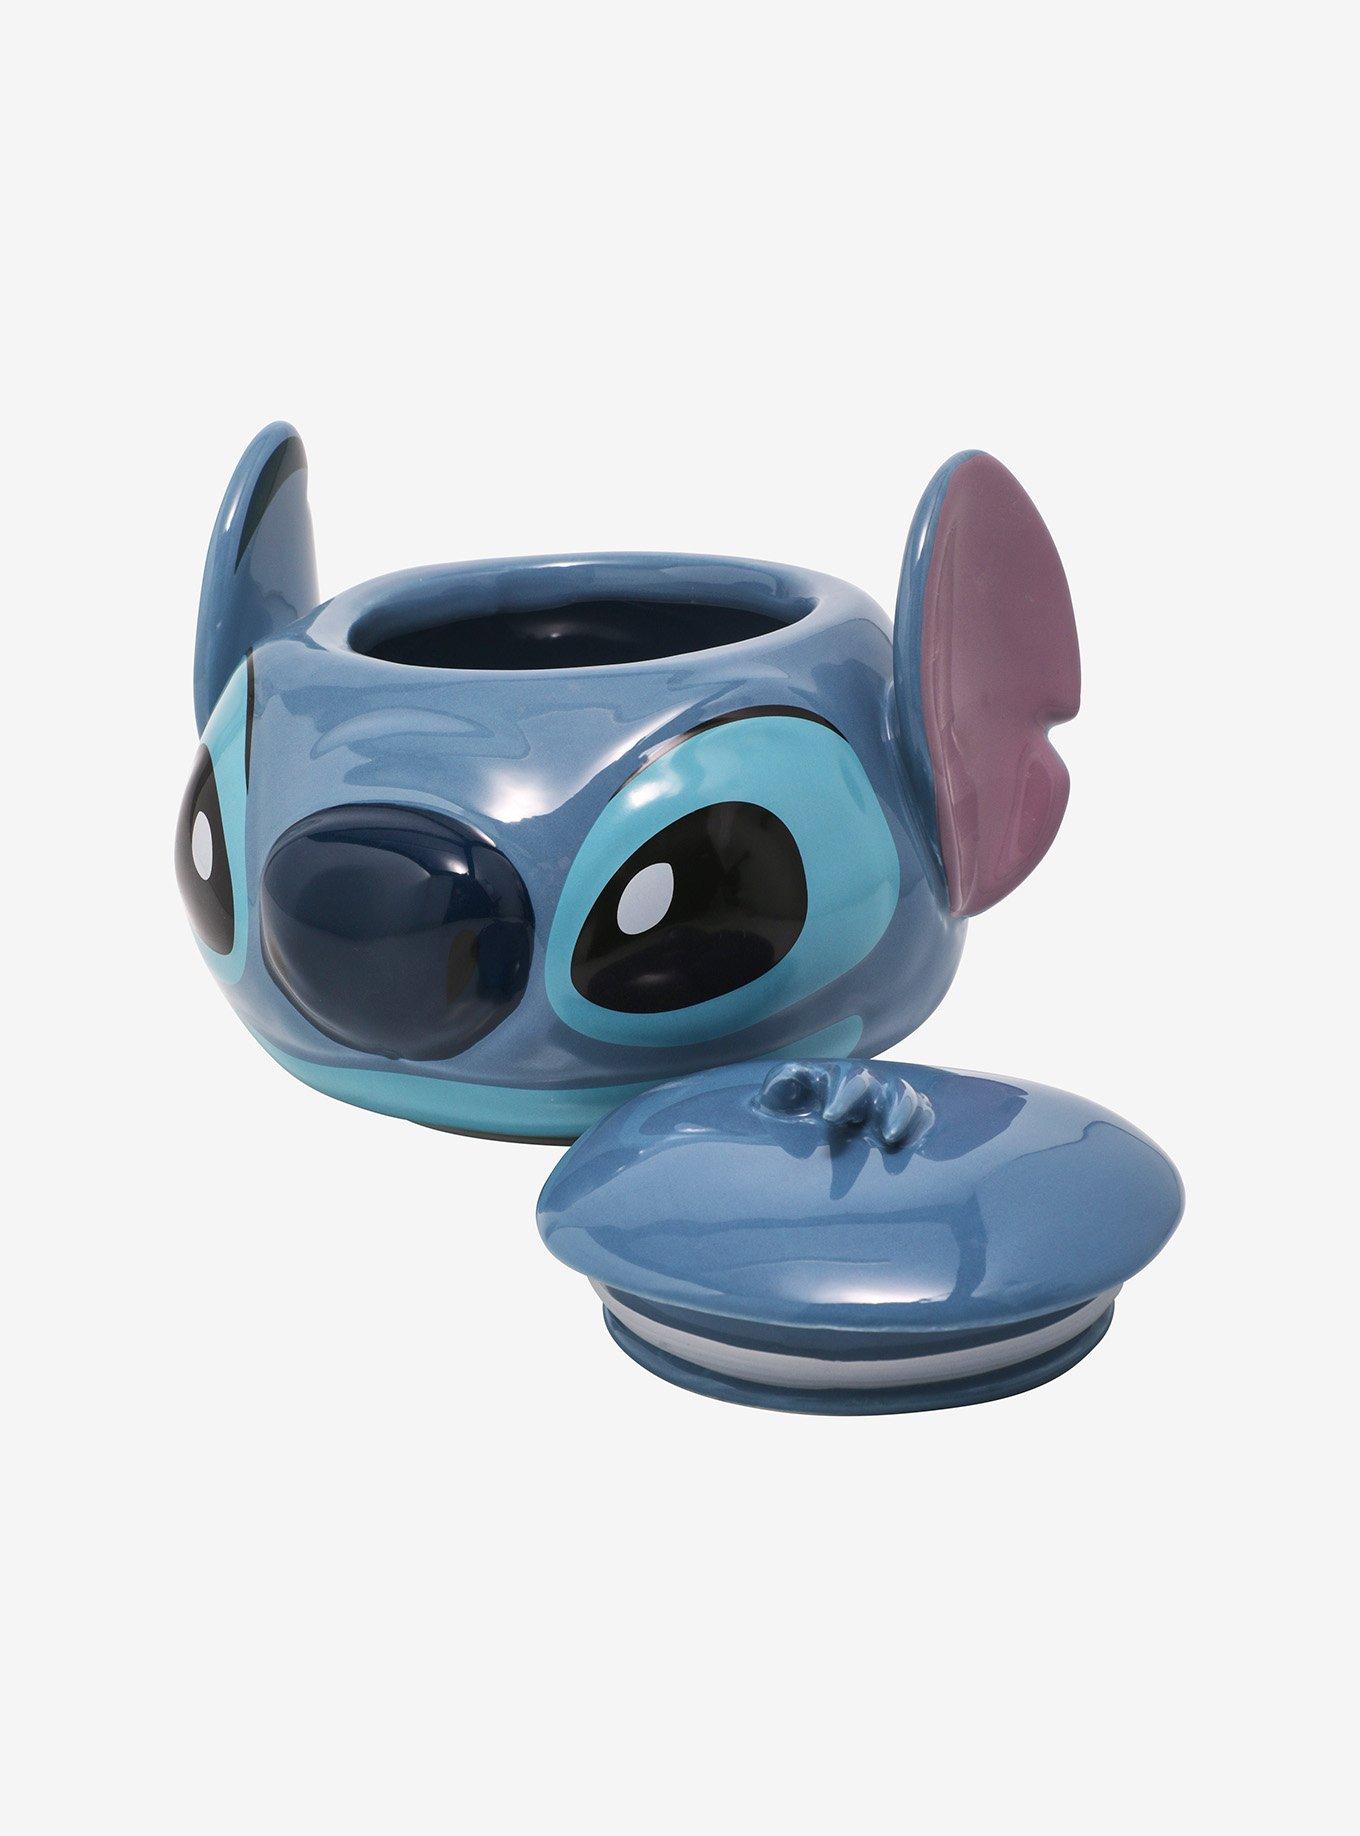 Disney Lilo & Stitch Figural Stitch Cookie Jar, , alternate